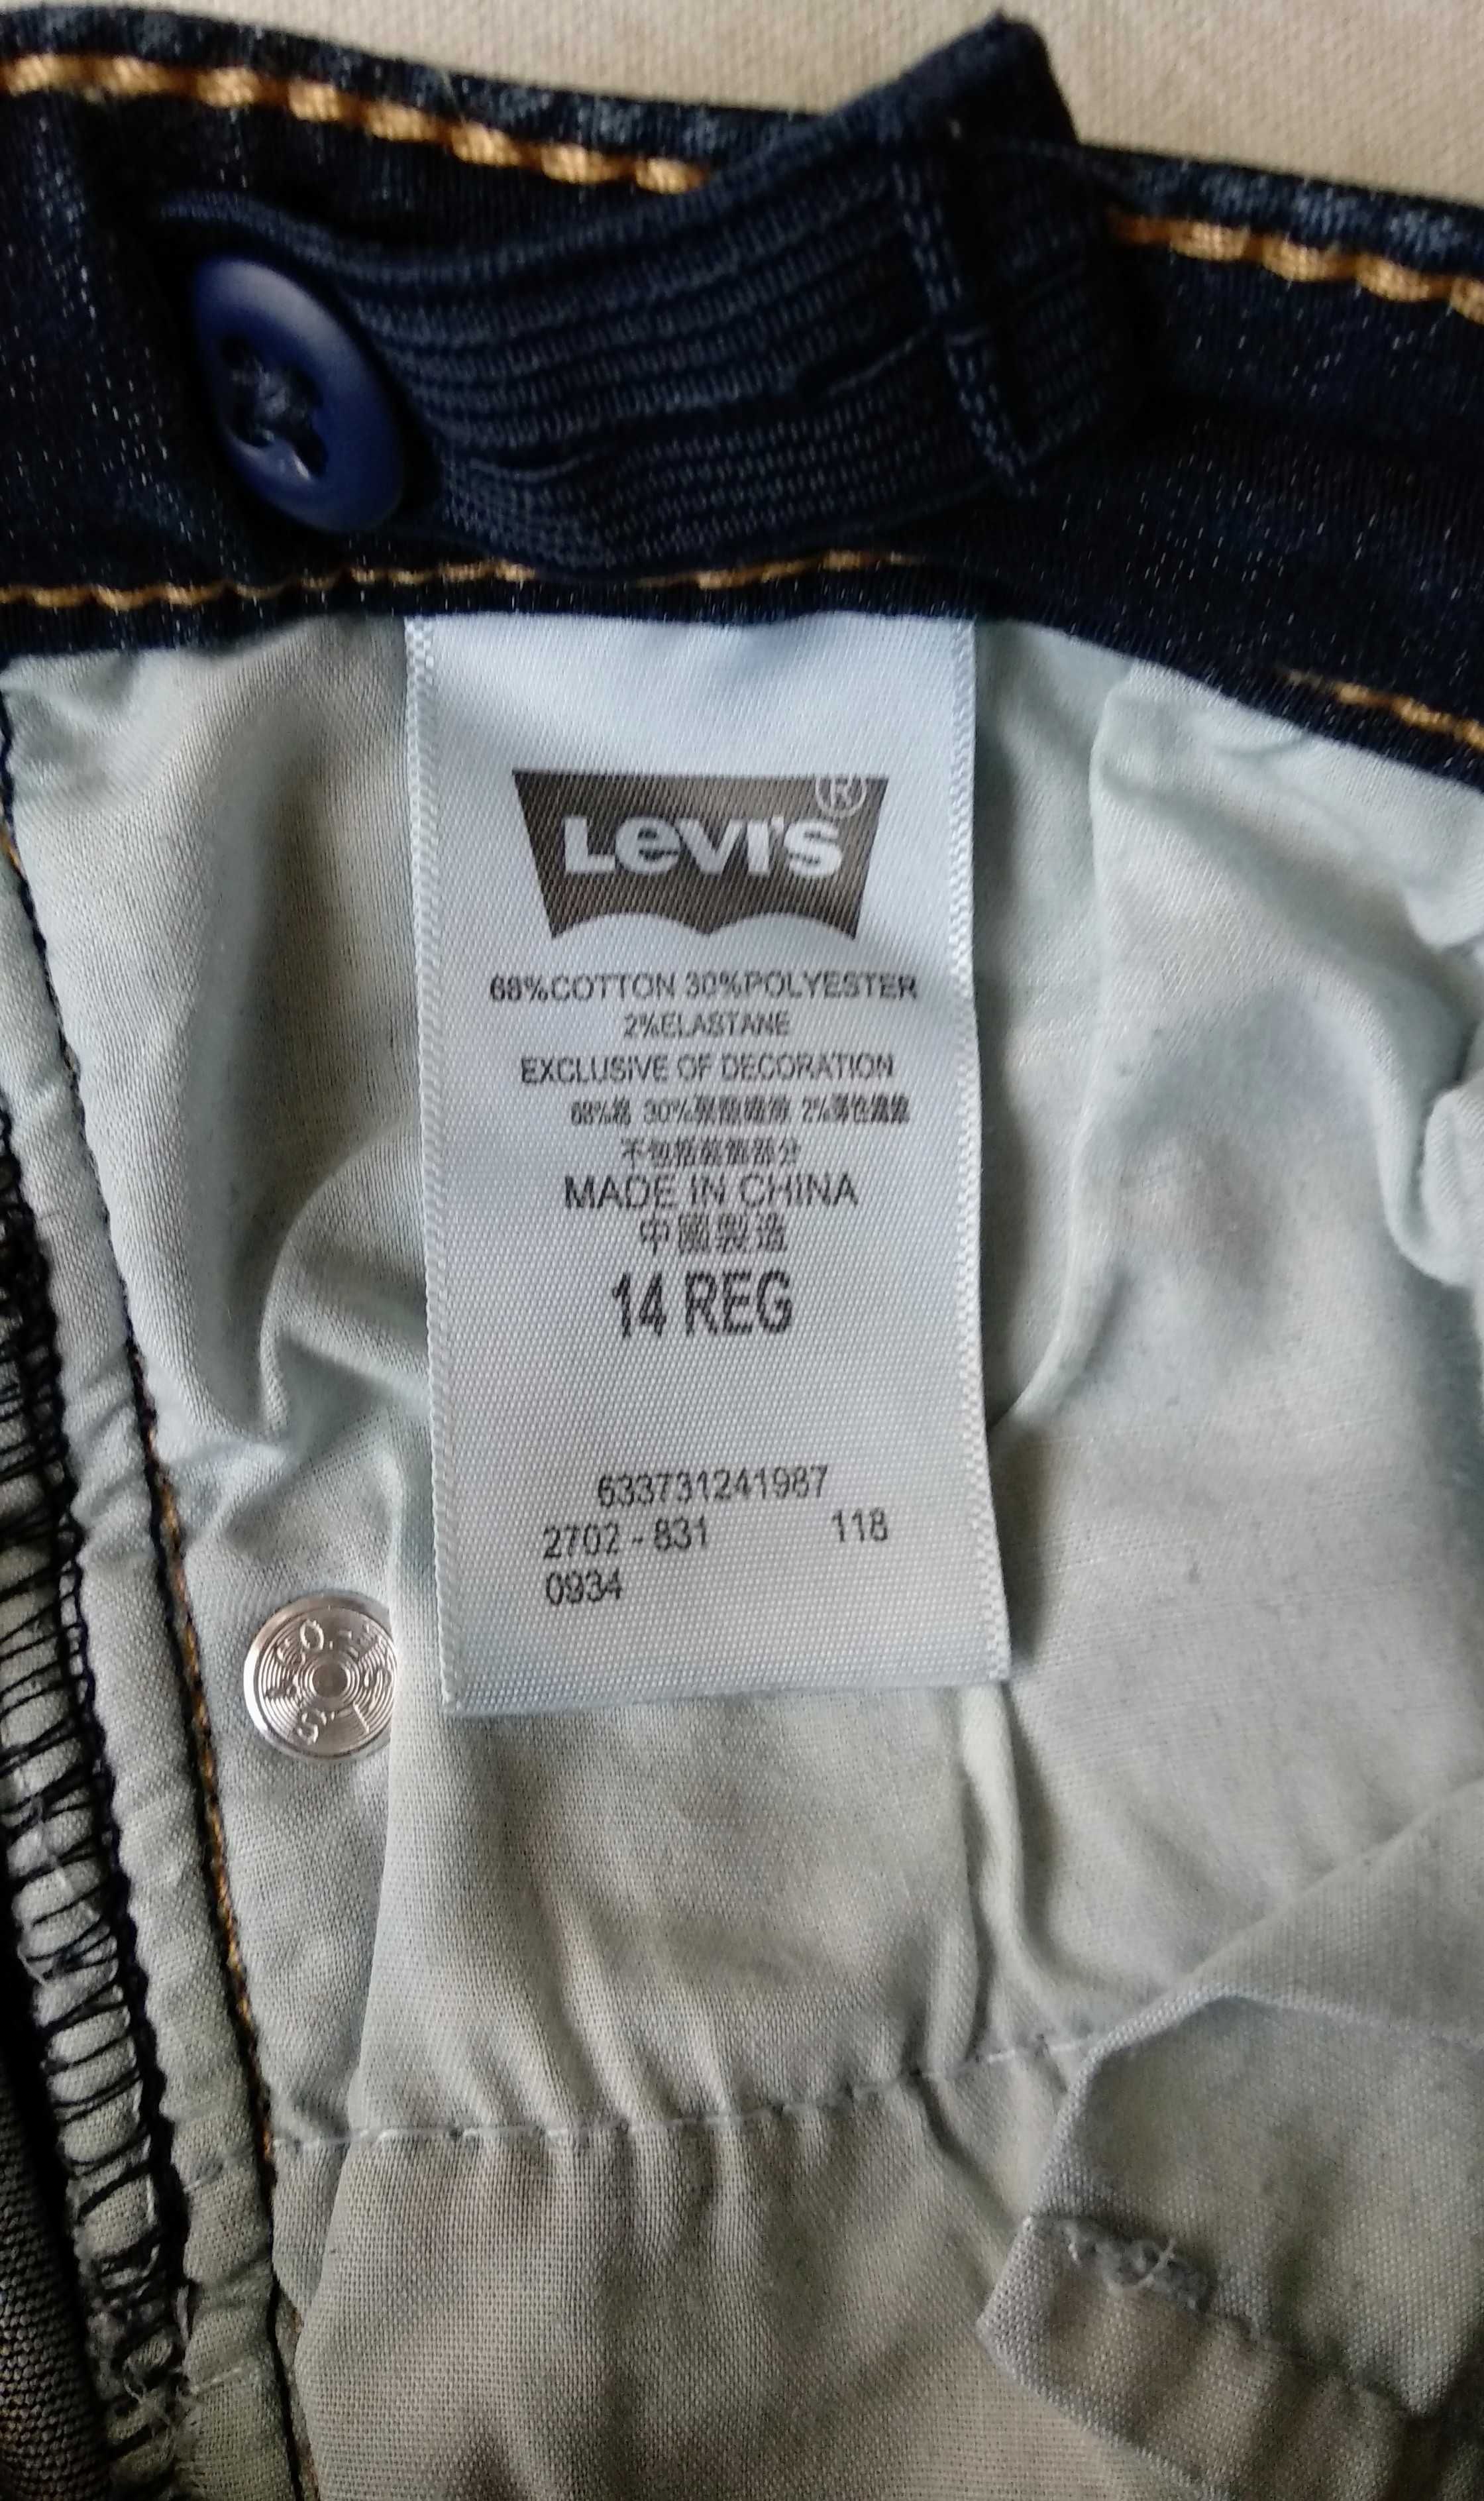 Spodnie oryginalne jeans * LEVI'S super skinny 710 z USA 14 * idealne